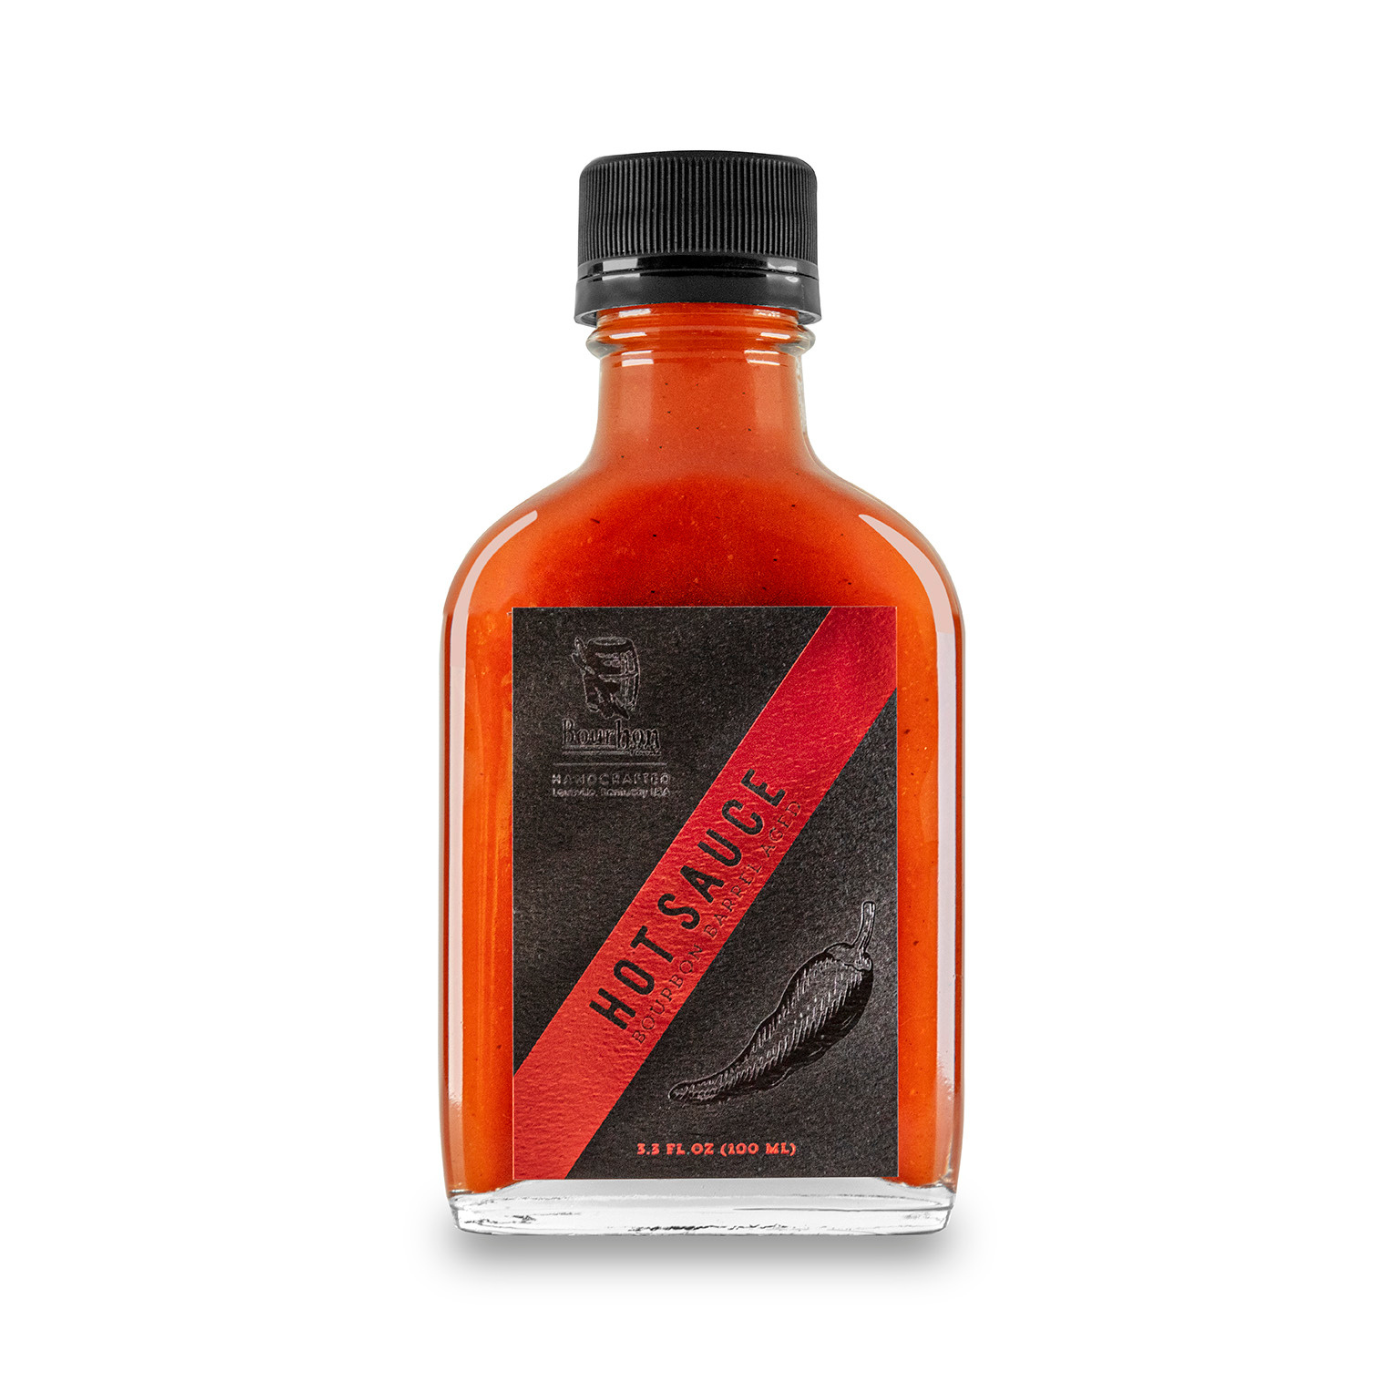 bottle of Bourbon Barrel Hot Sauce on a white background.